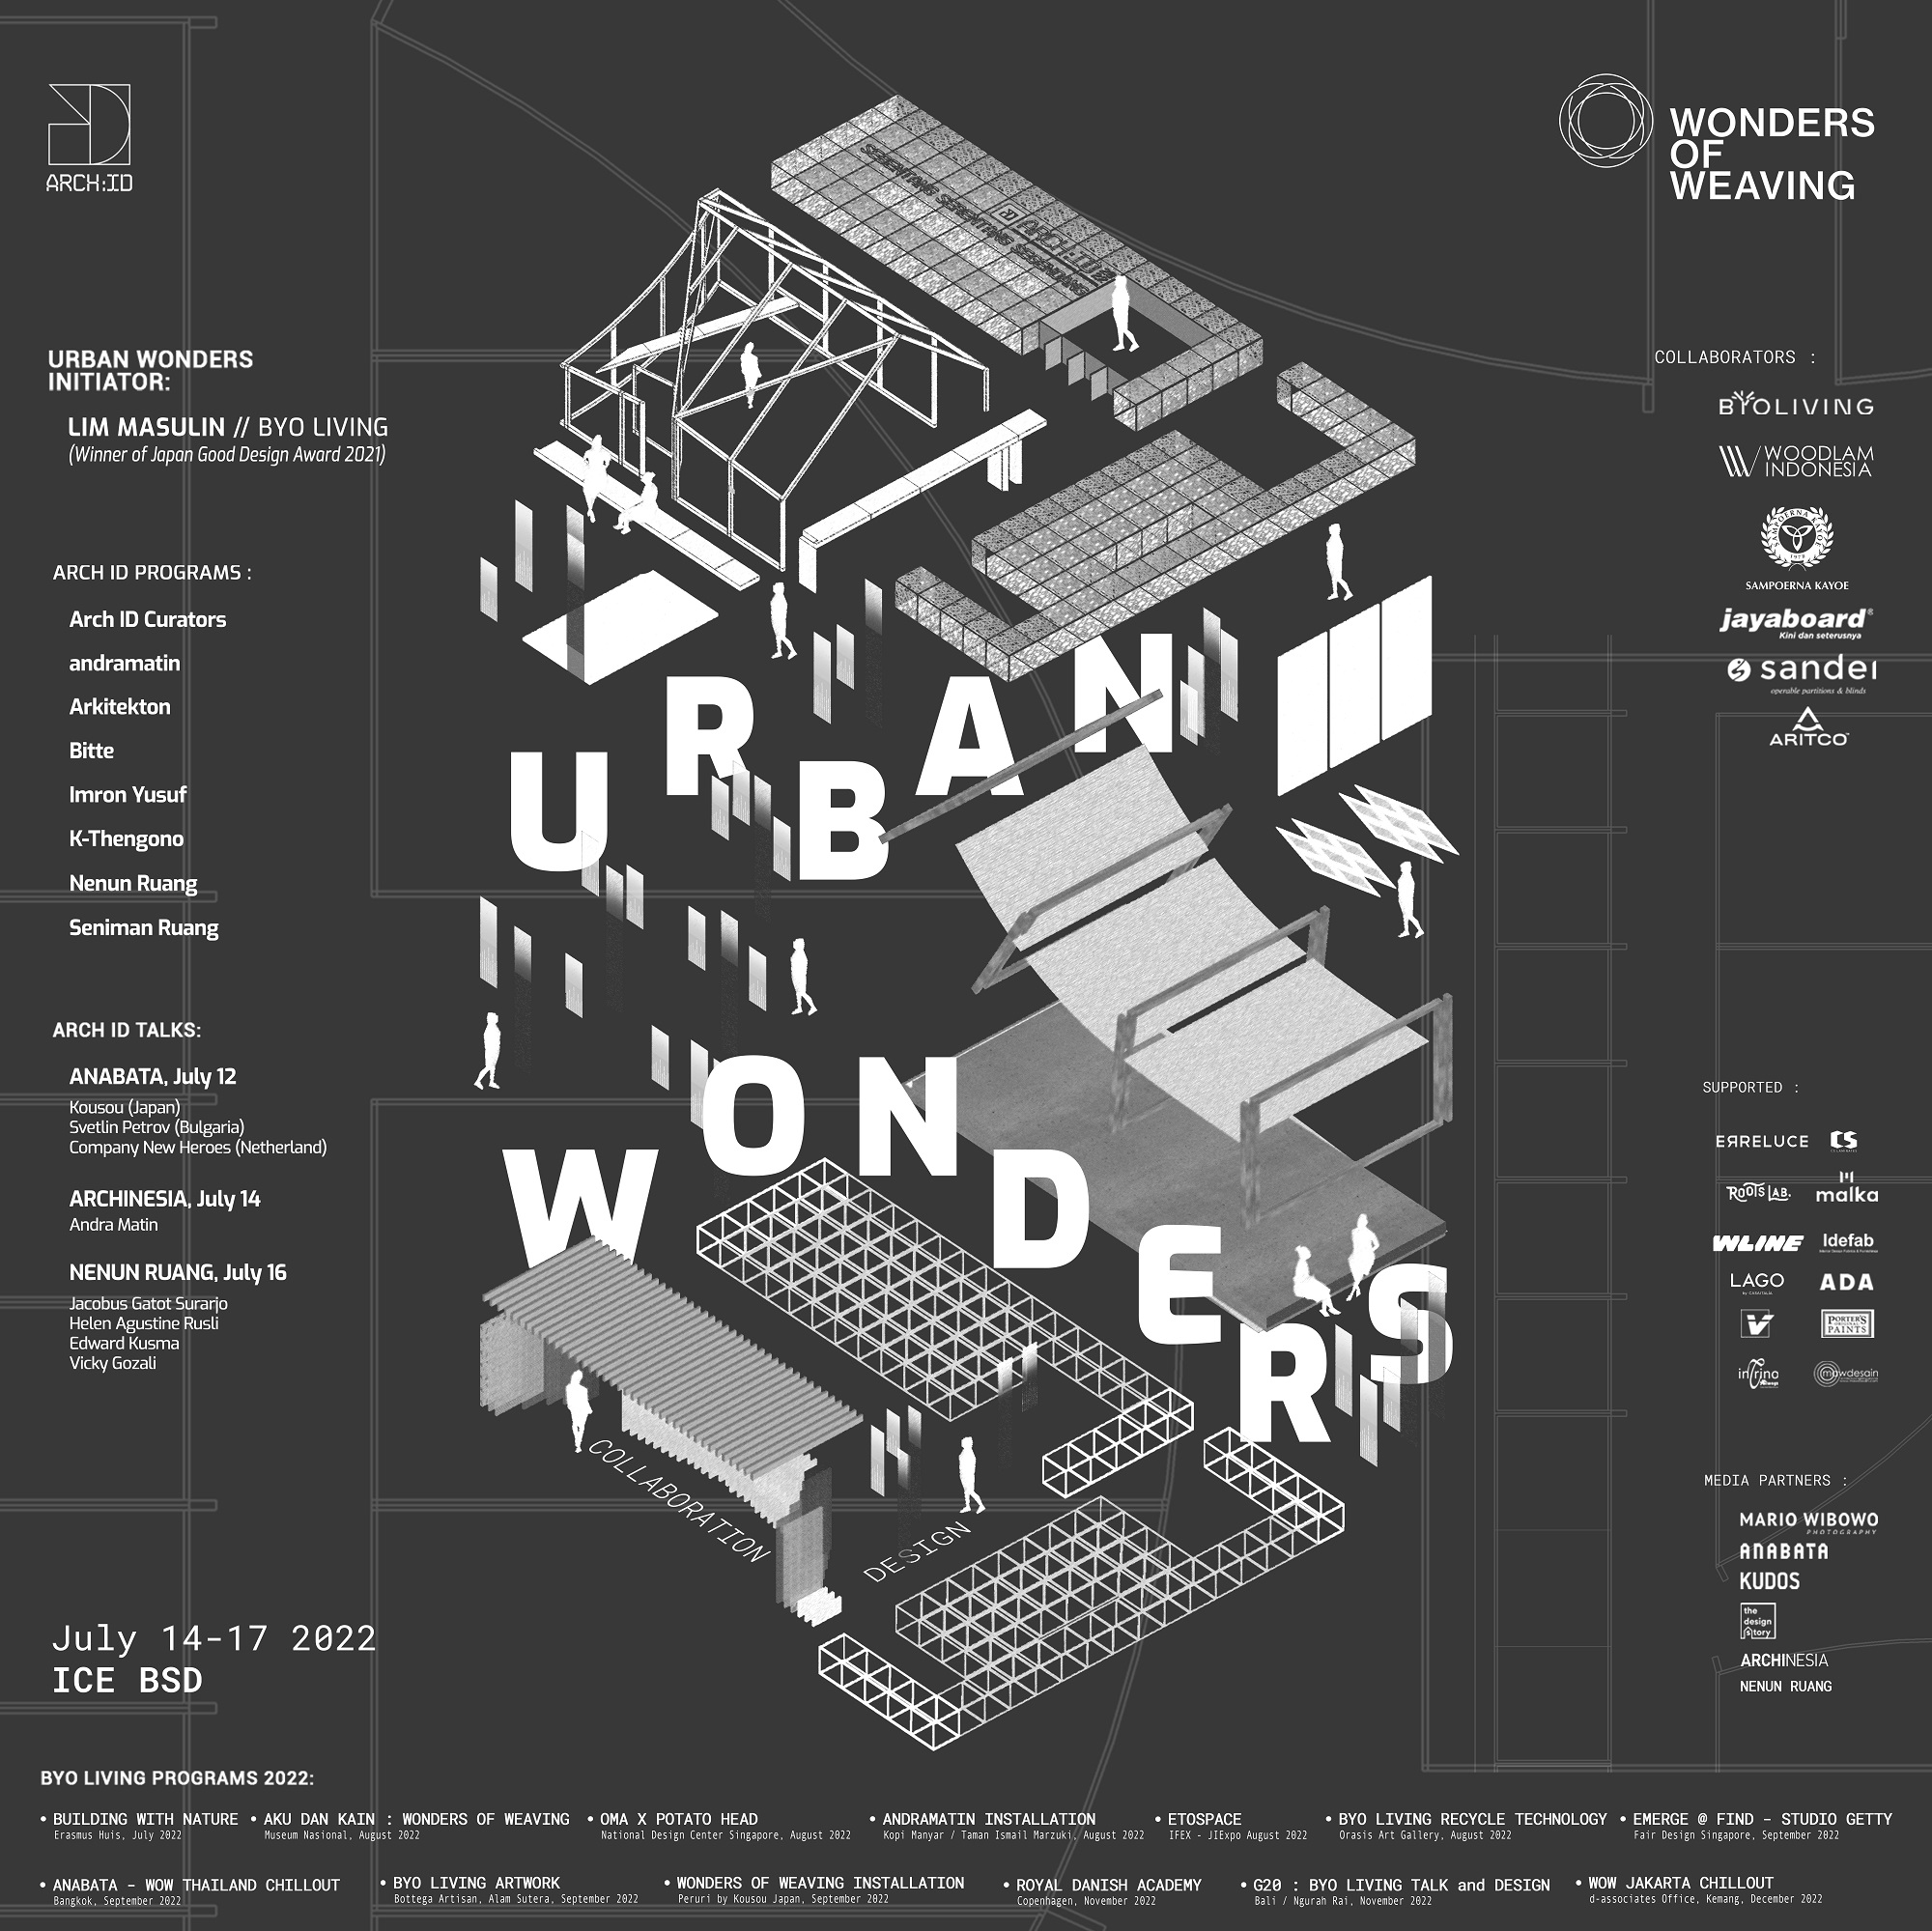 Wonders of Weaving 'Urban Wonders' at ARCH:ID 2022 Exhibition